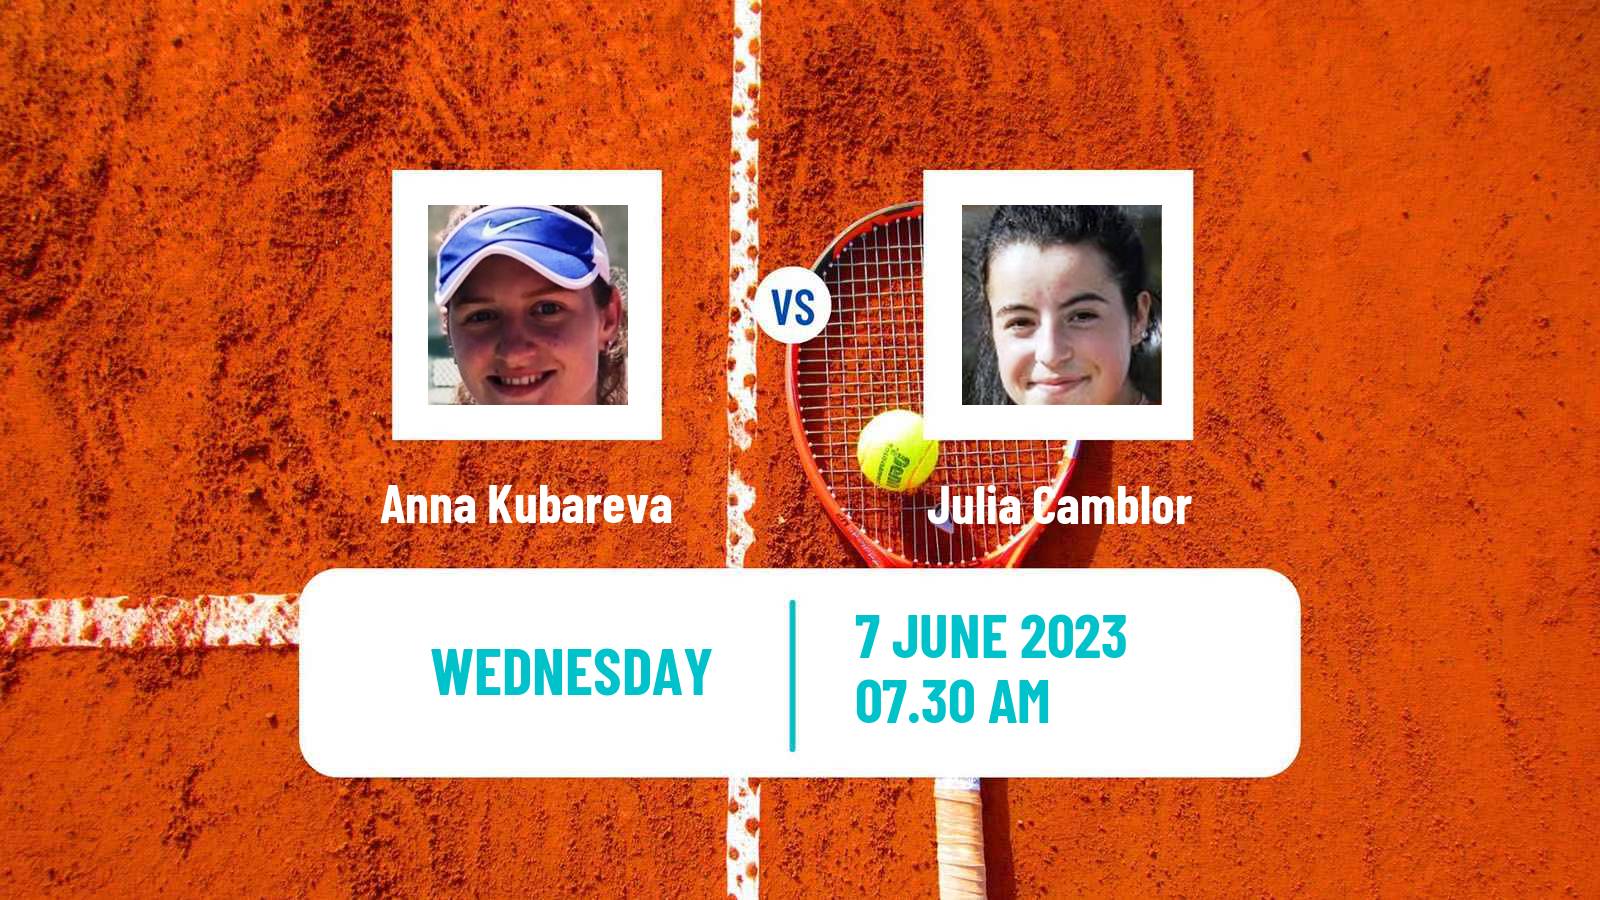 Tennis ITF W25 Setubal Women Anna Kubareva - Julia Camblor